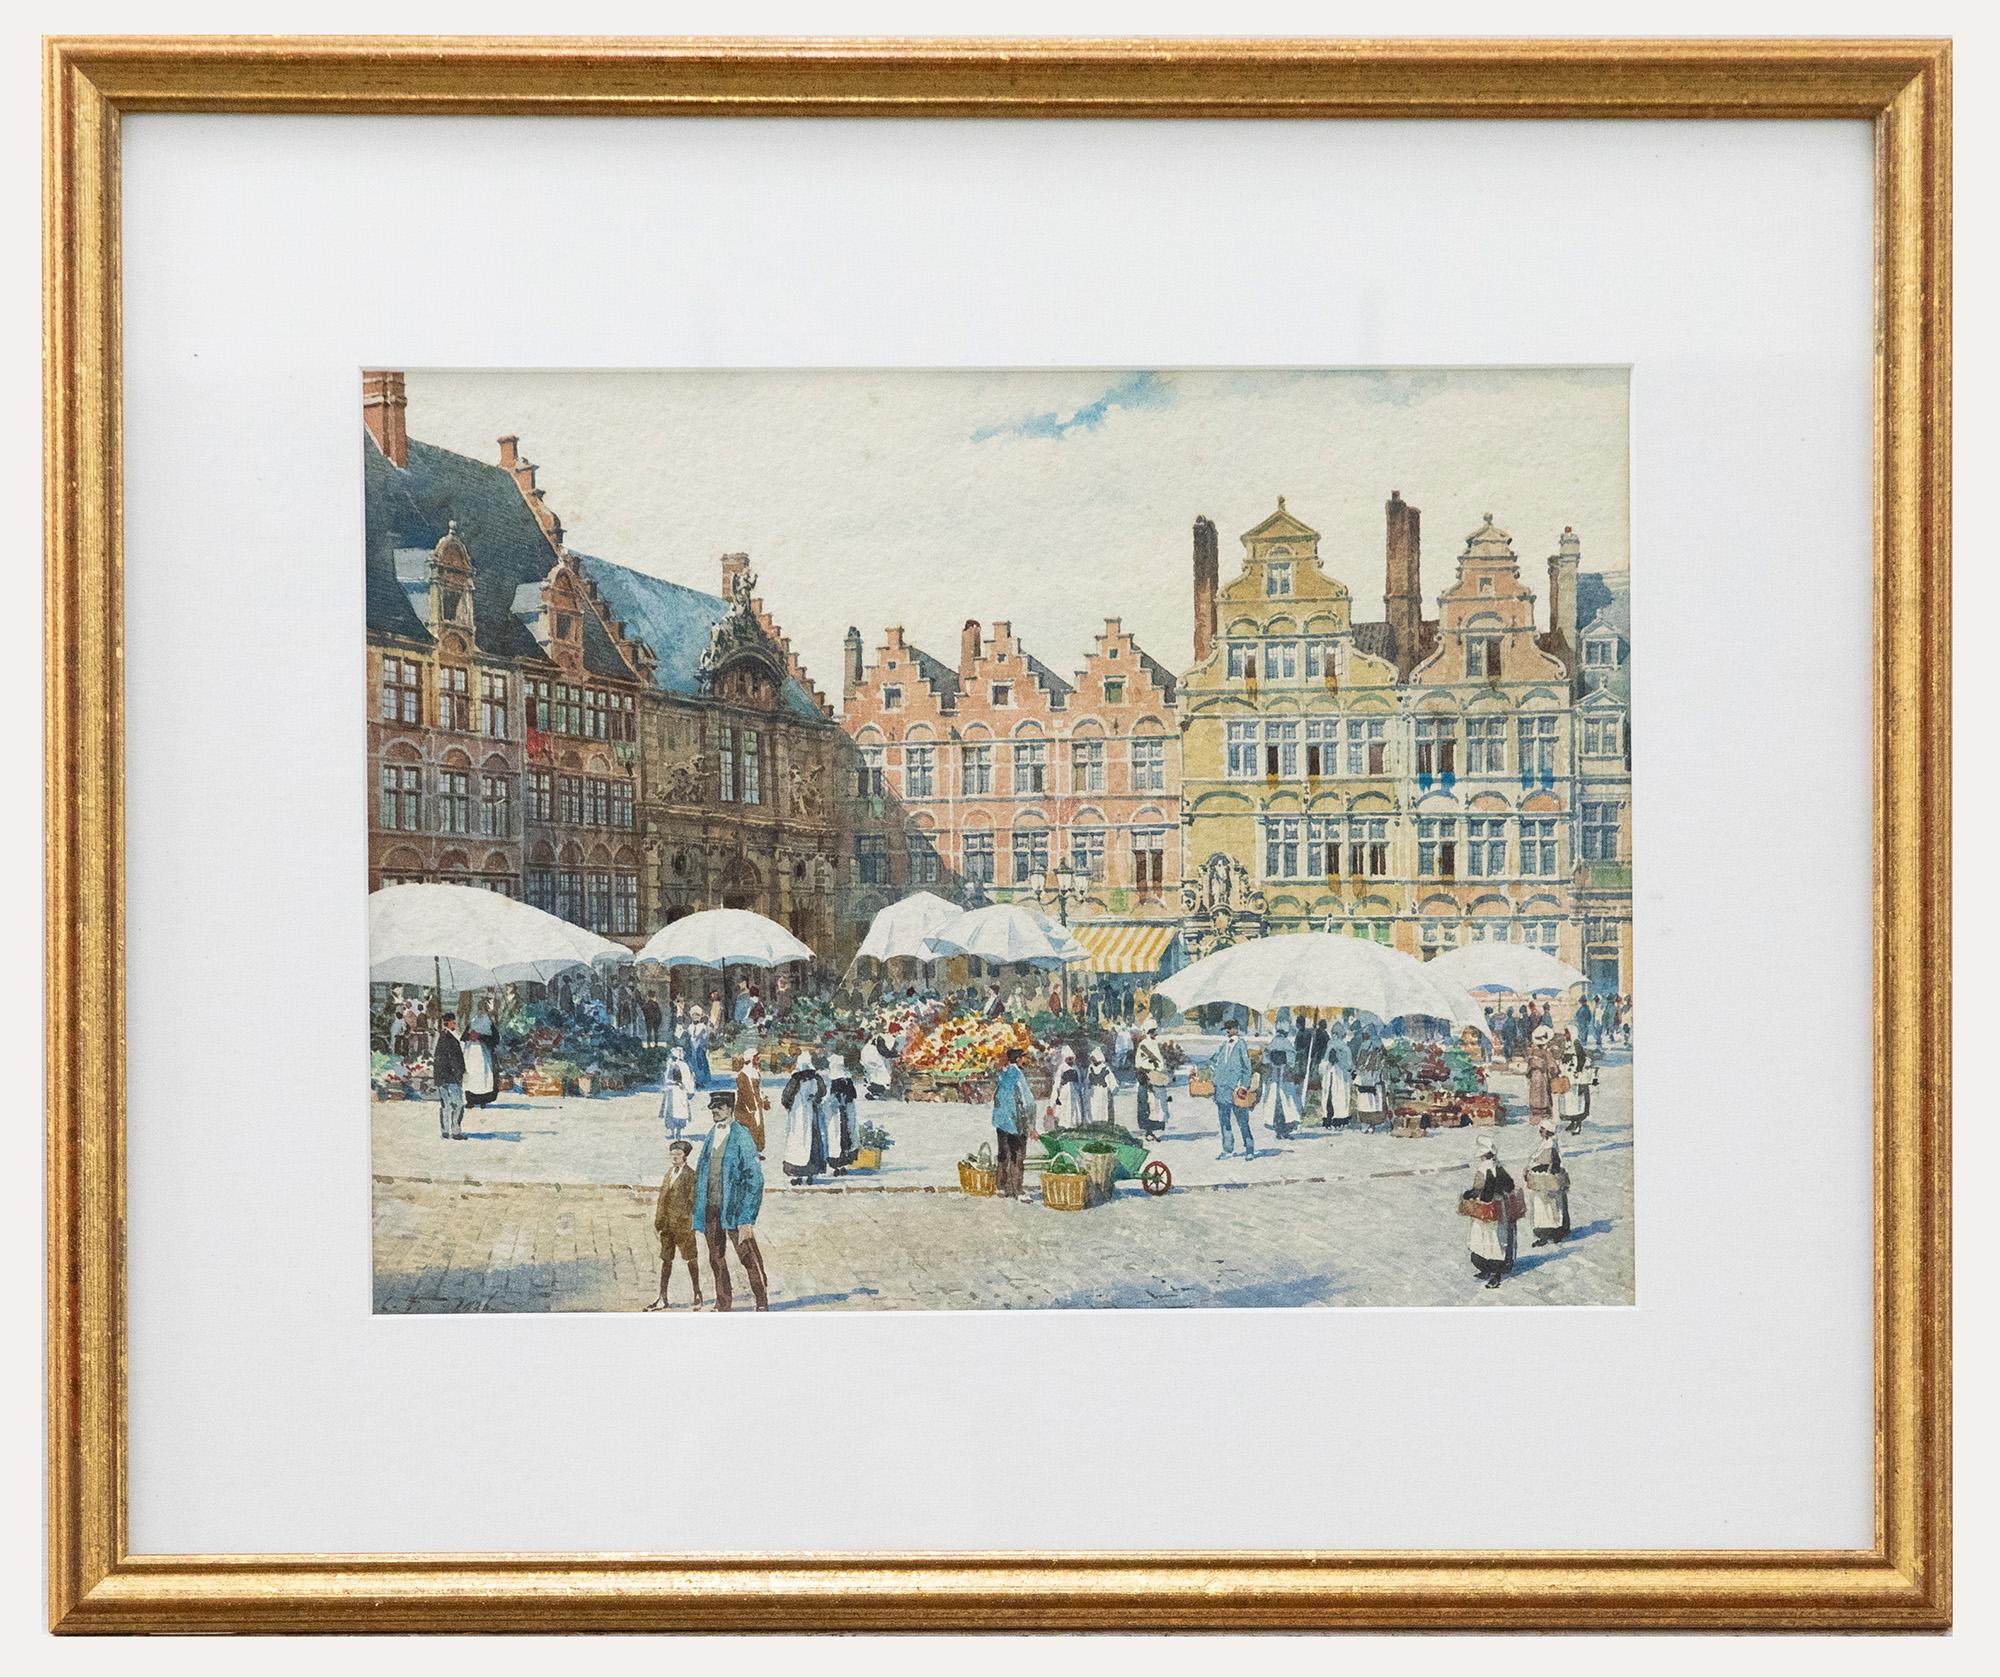 Unknown Landscape Art - A.C.F. - Framed Early 20th Century Watercolour, La Grande Place, Brussels